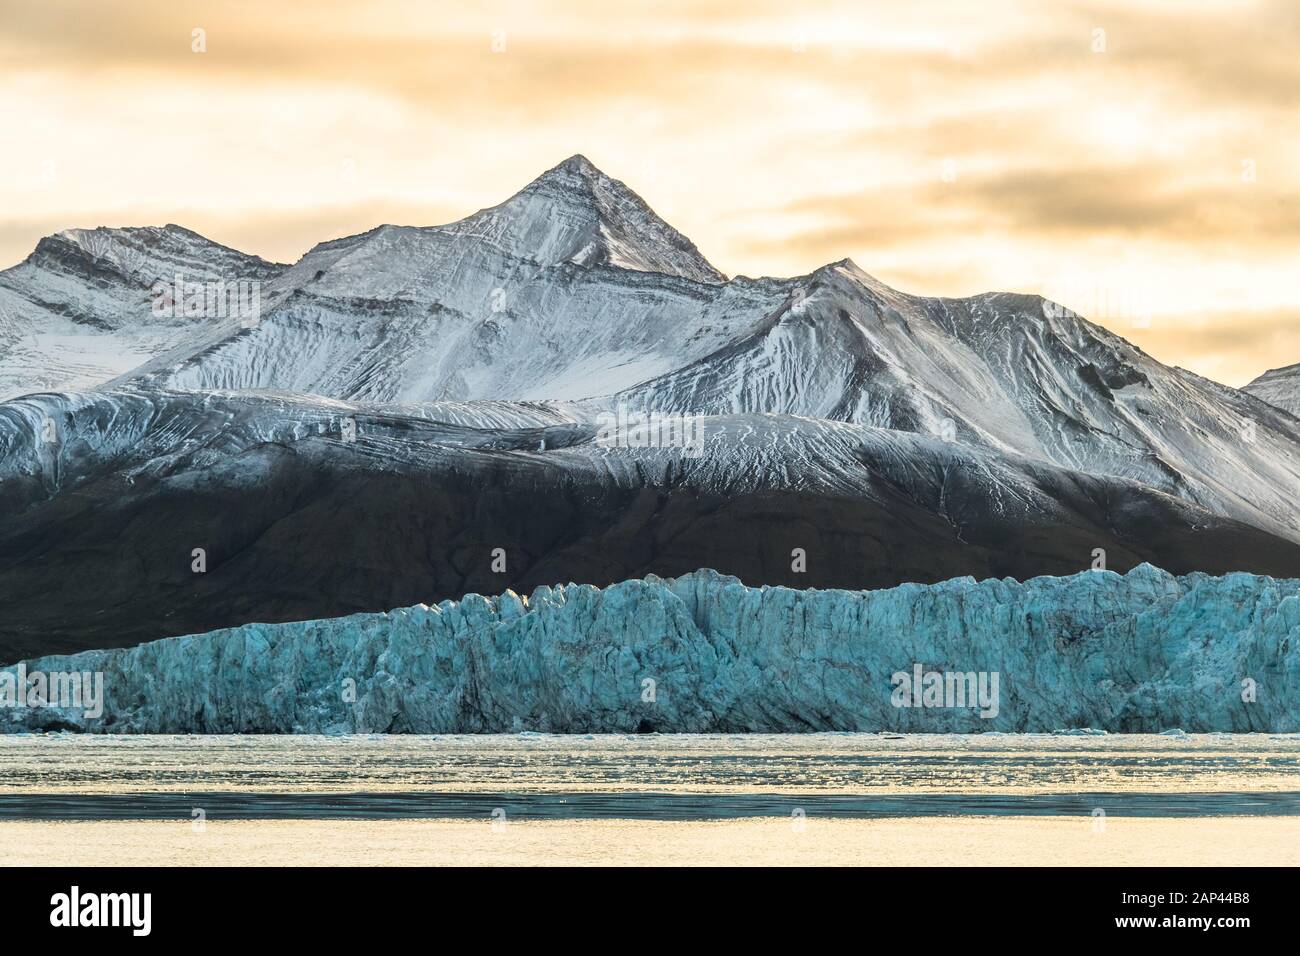 icy mountain, blue glacier, yellow sky - tremendous arctic landscape Stock Photo